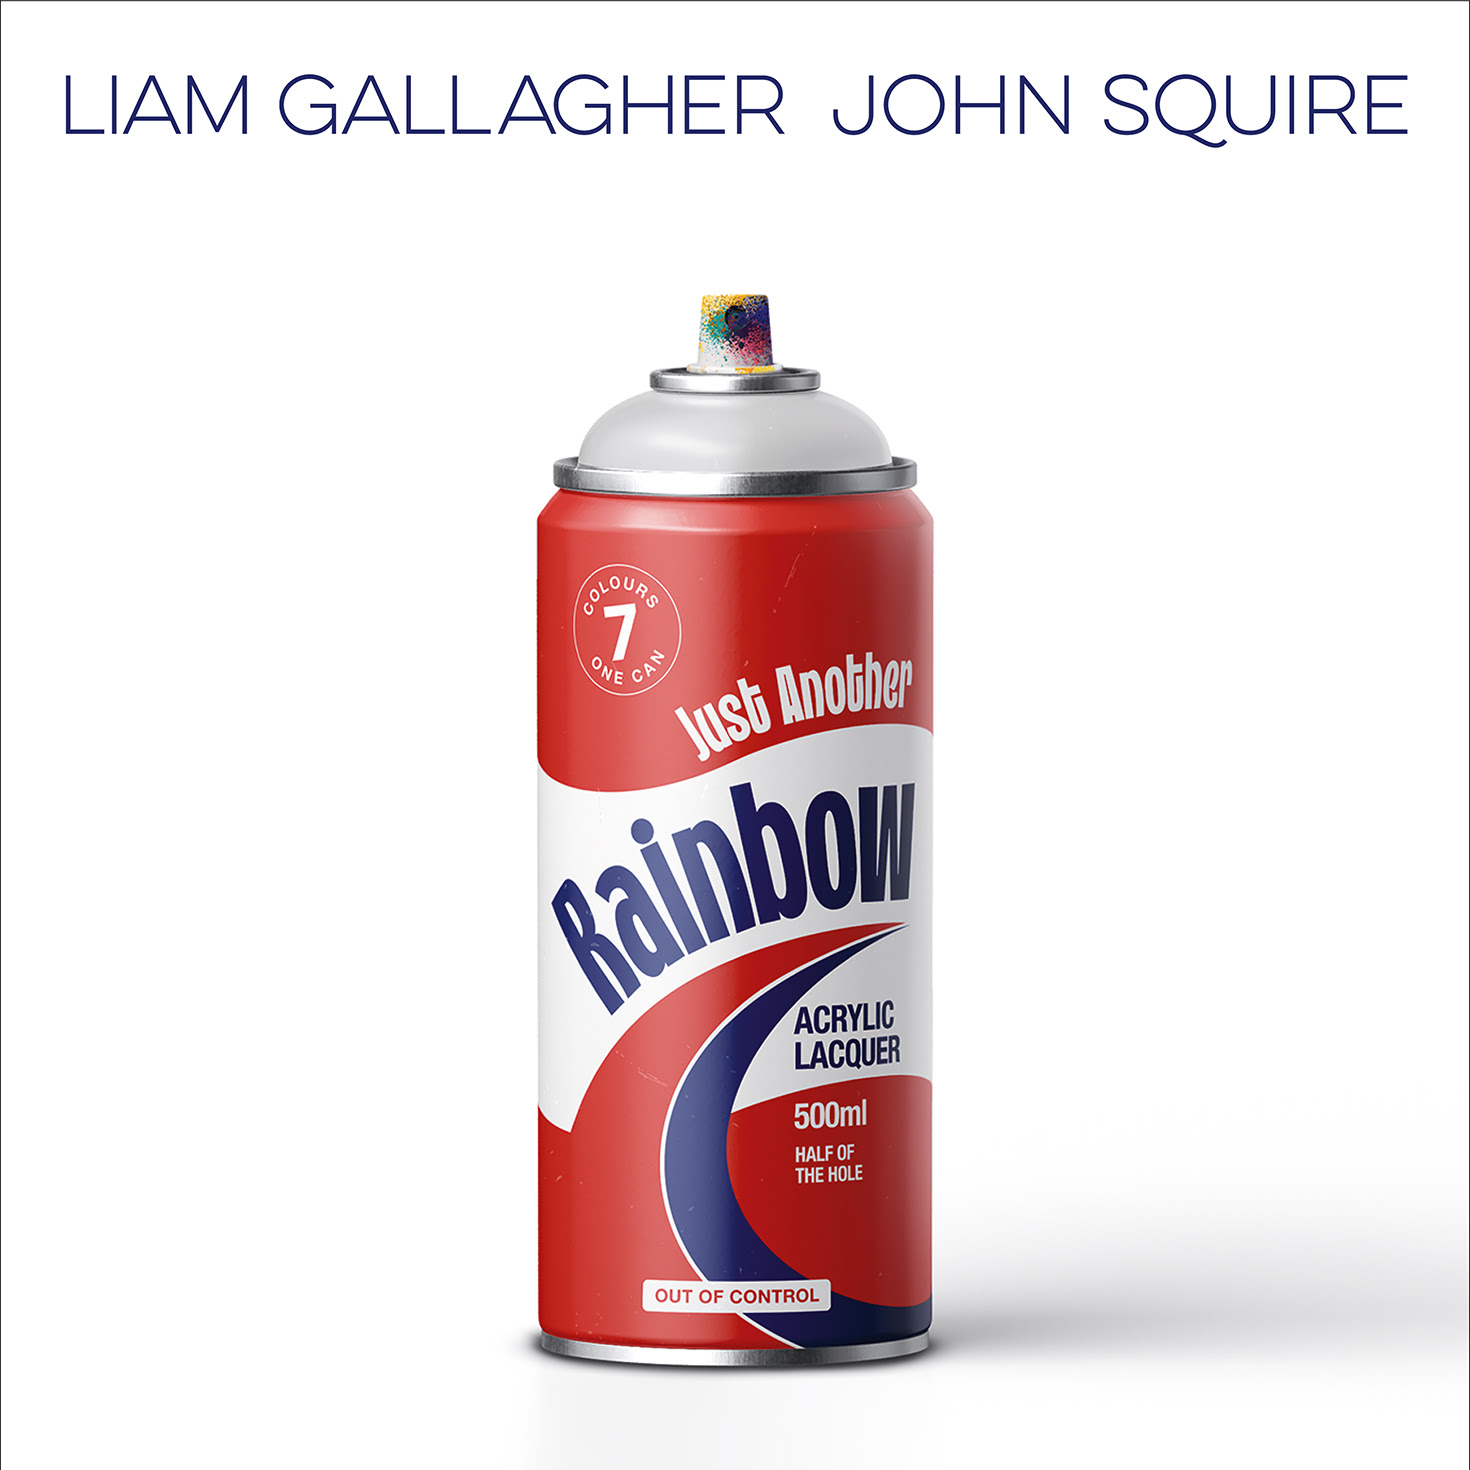 liam-gallagher-album-e-tour---immagini-gallagher.jpg